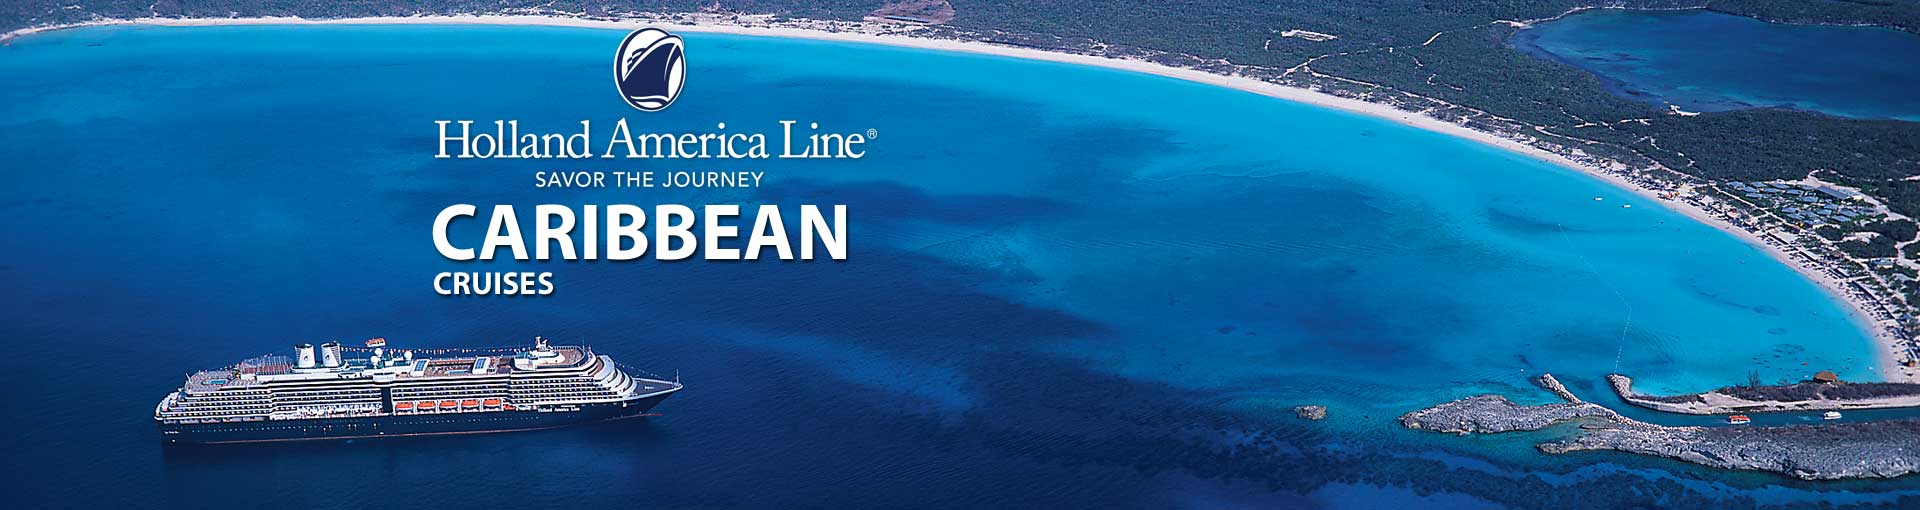 Holland America Caribbean Cruises, 2019, 2020 and 2021 Caribbean